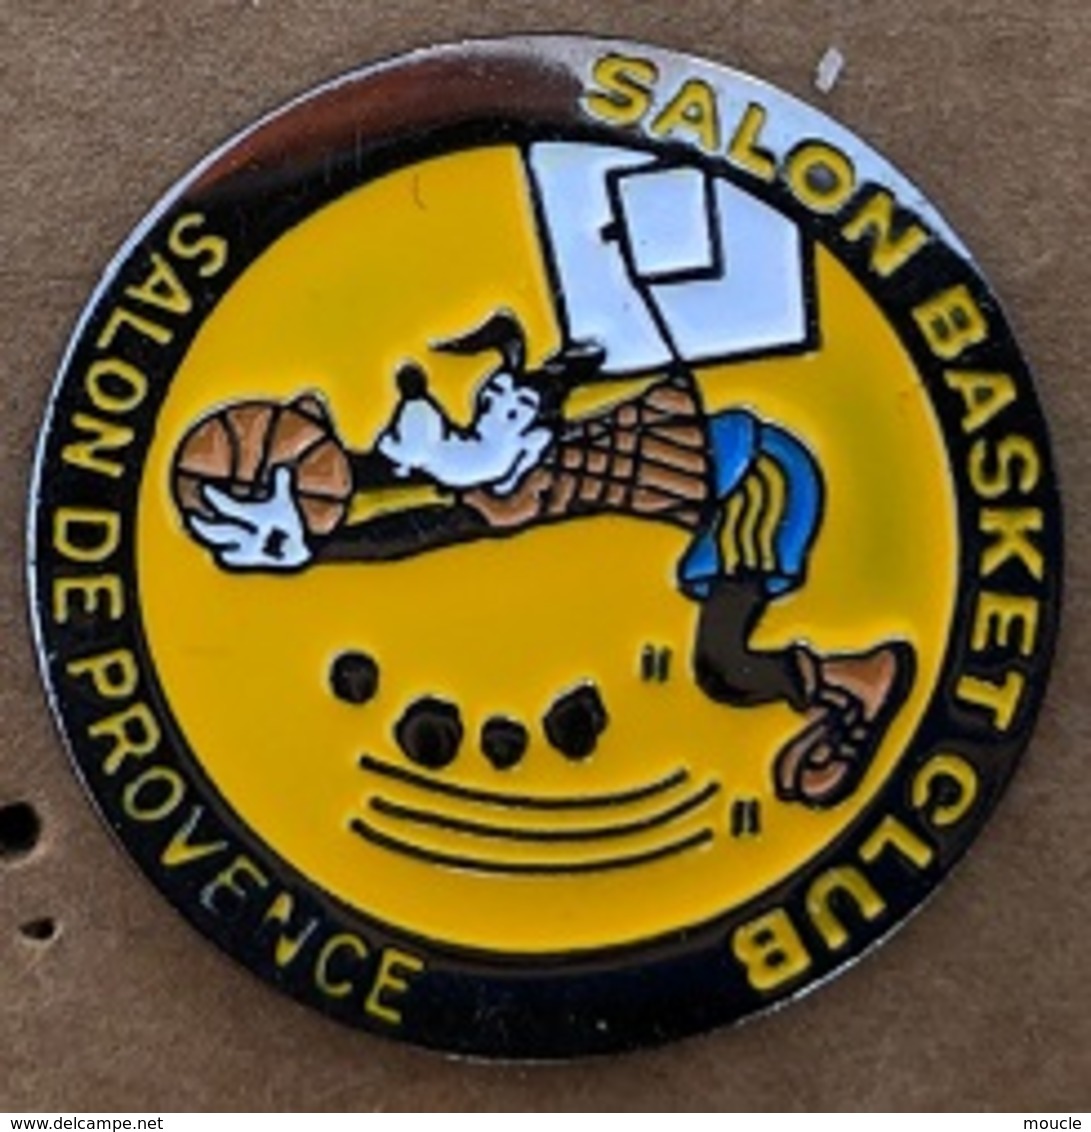 SALON BASKET CLUB - BASKET BALL - SALON DE PROVENCE - FRANCE - FRENCH RIVIERA - DINGO  -  (24) - Basketbal